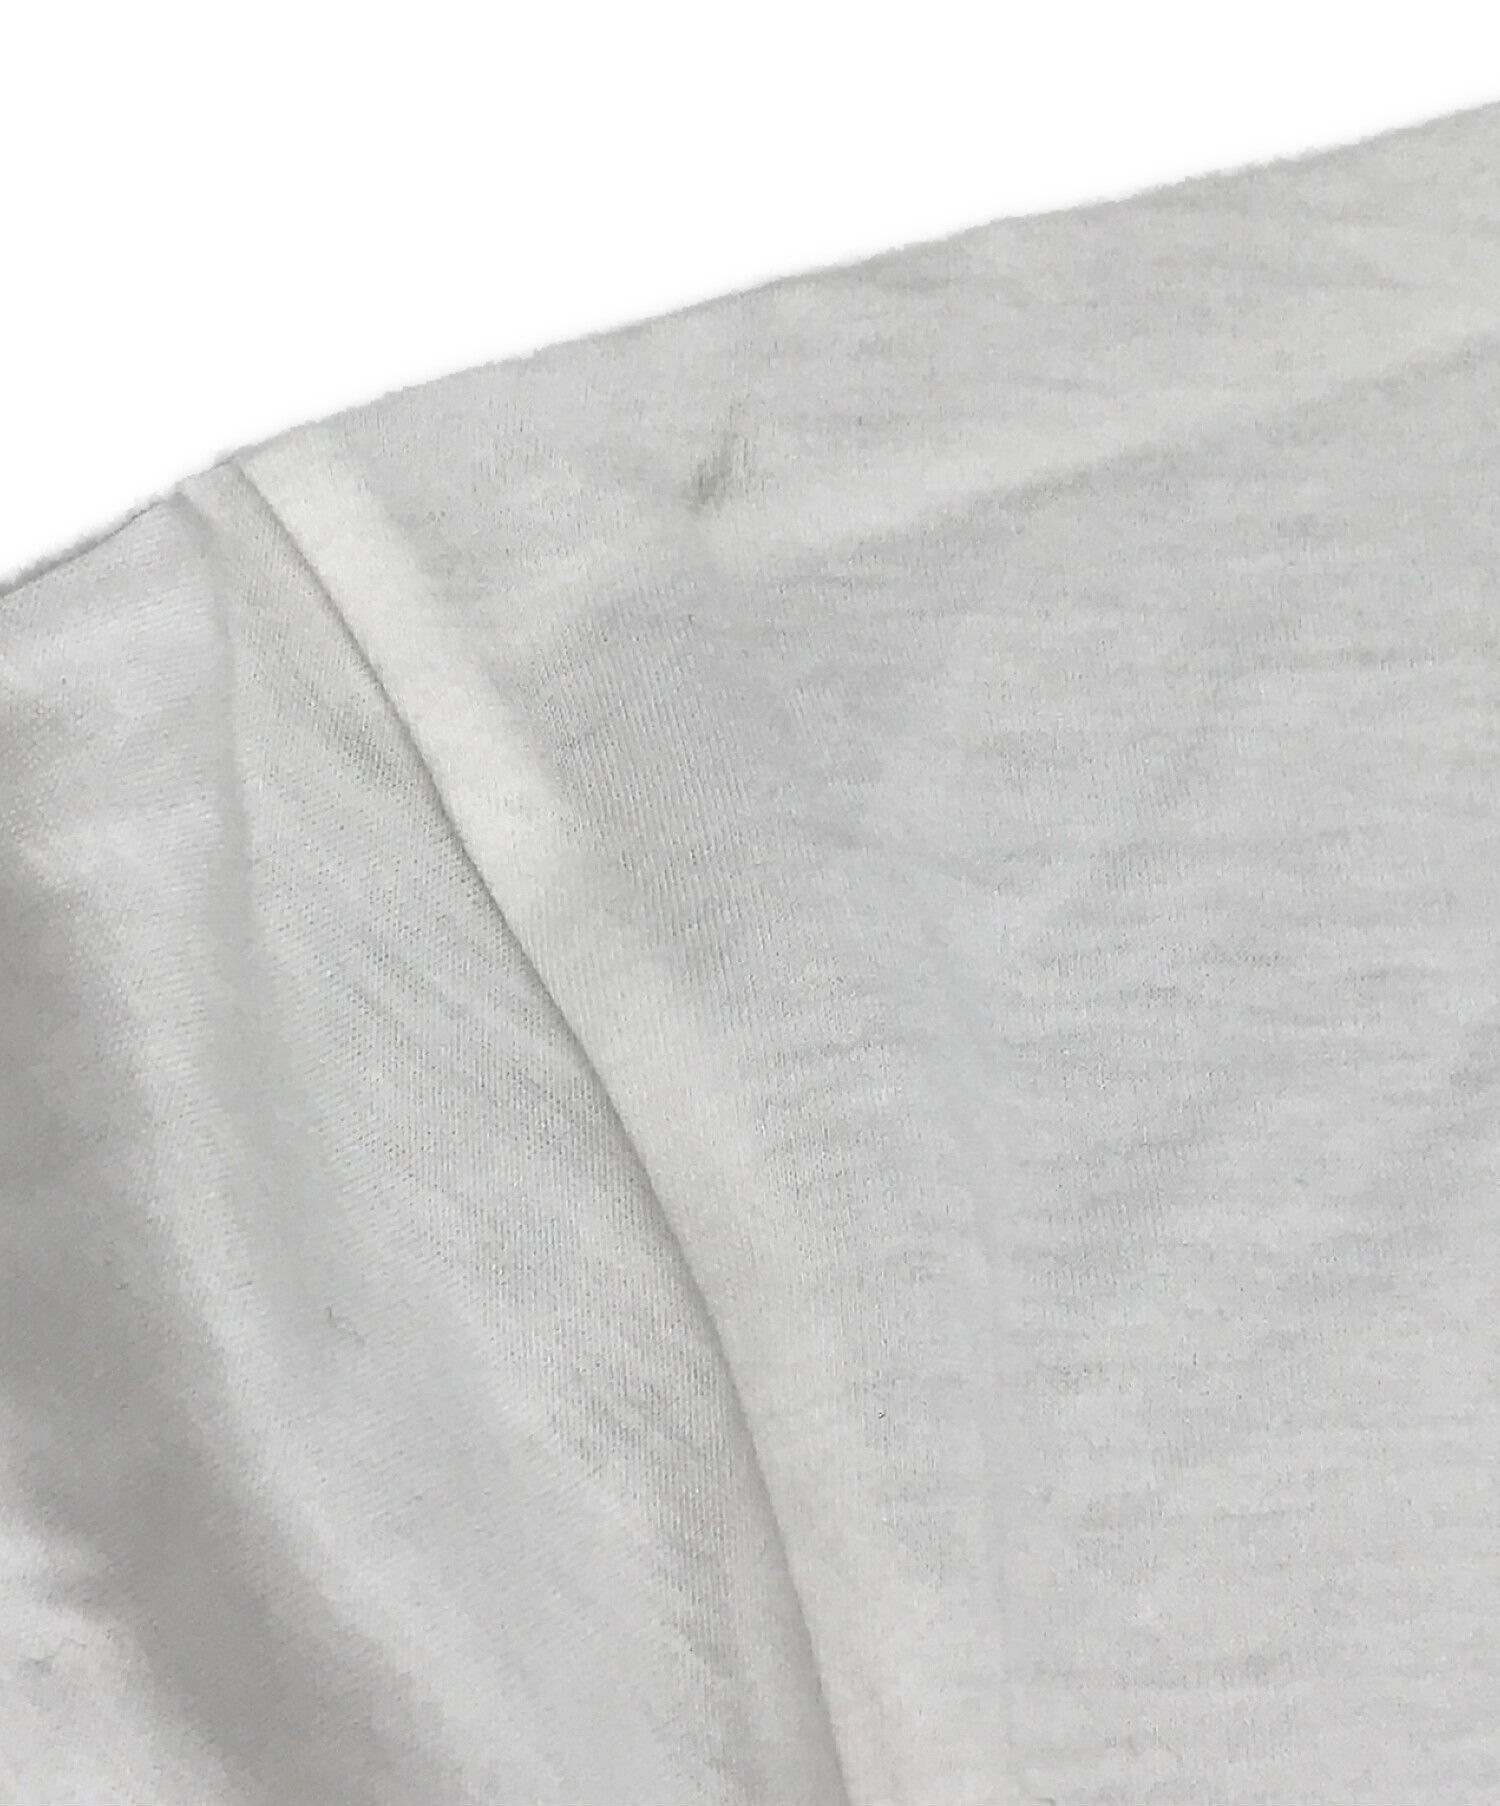 VALENTINO (ヴァレンティノ) バックスタッズポケットTシャツ ホワイト サイズ:SIZE L